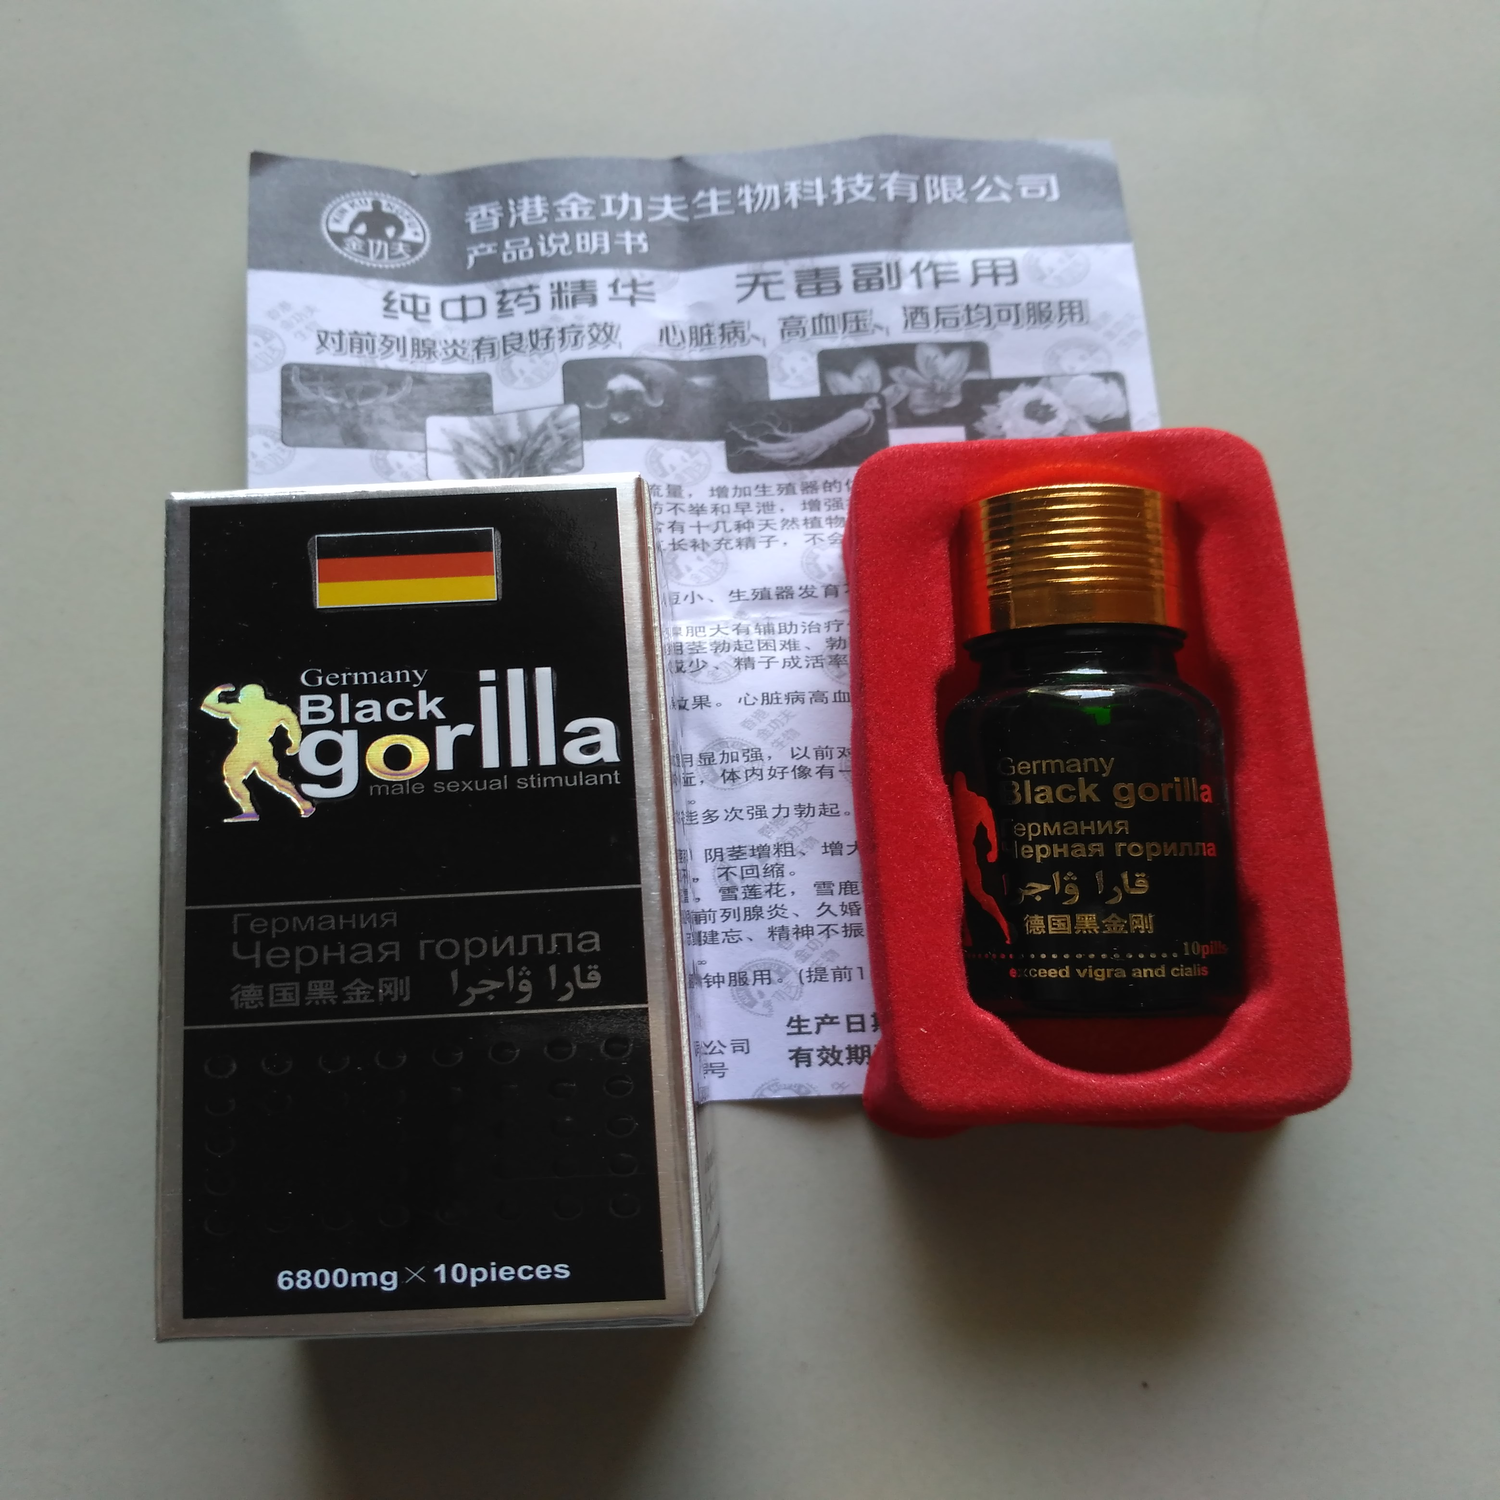 Germany Black Gorilla Male Sex Enhancement Pills